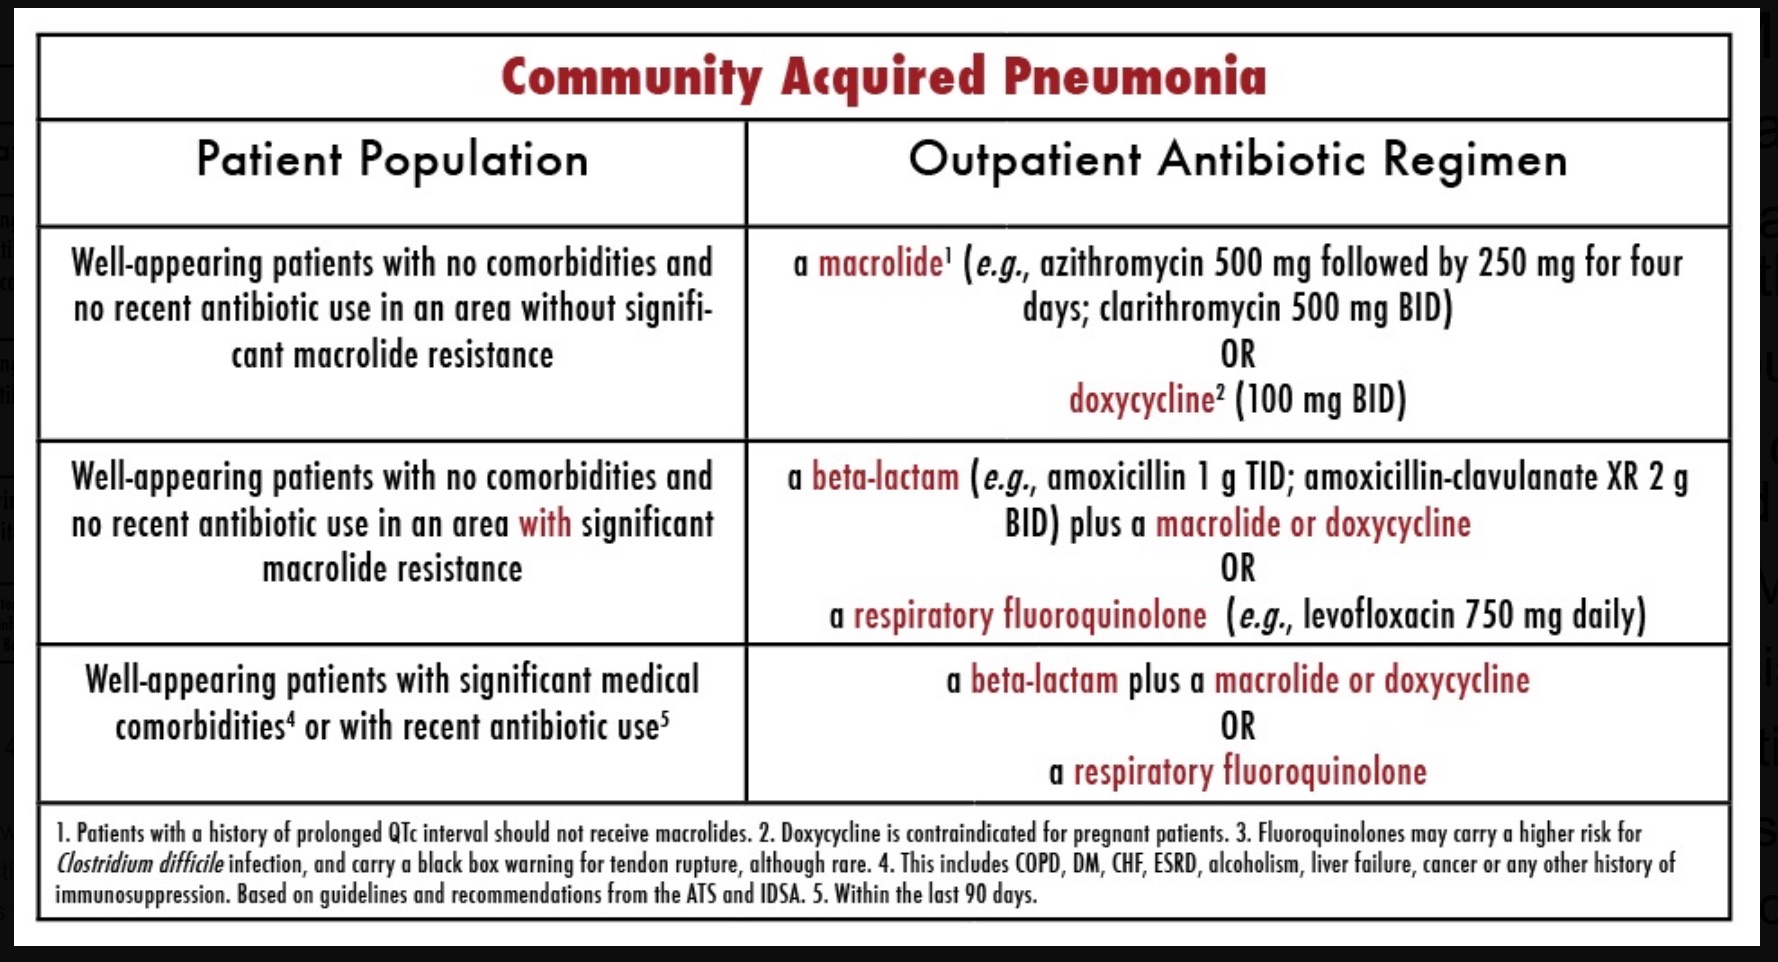 Community Acquired Pneumonia Treatment Guidelines 2018